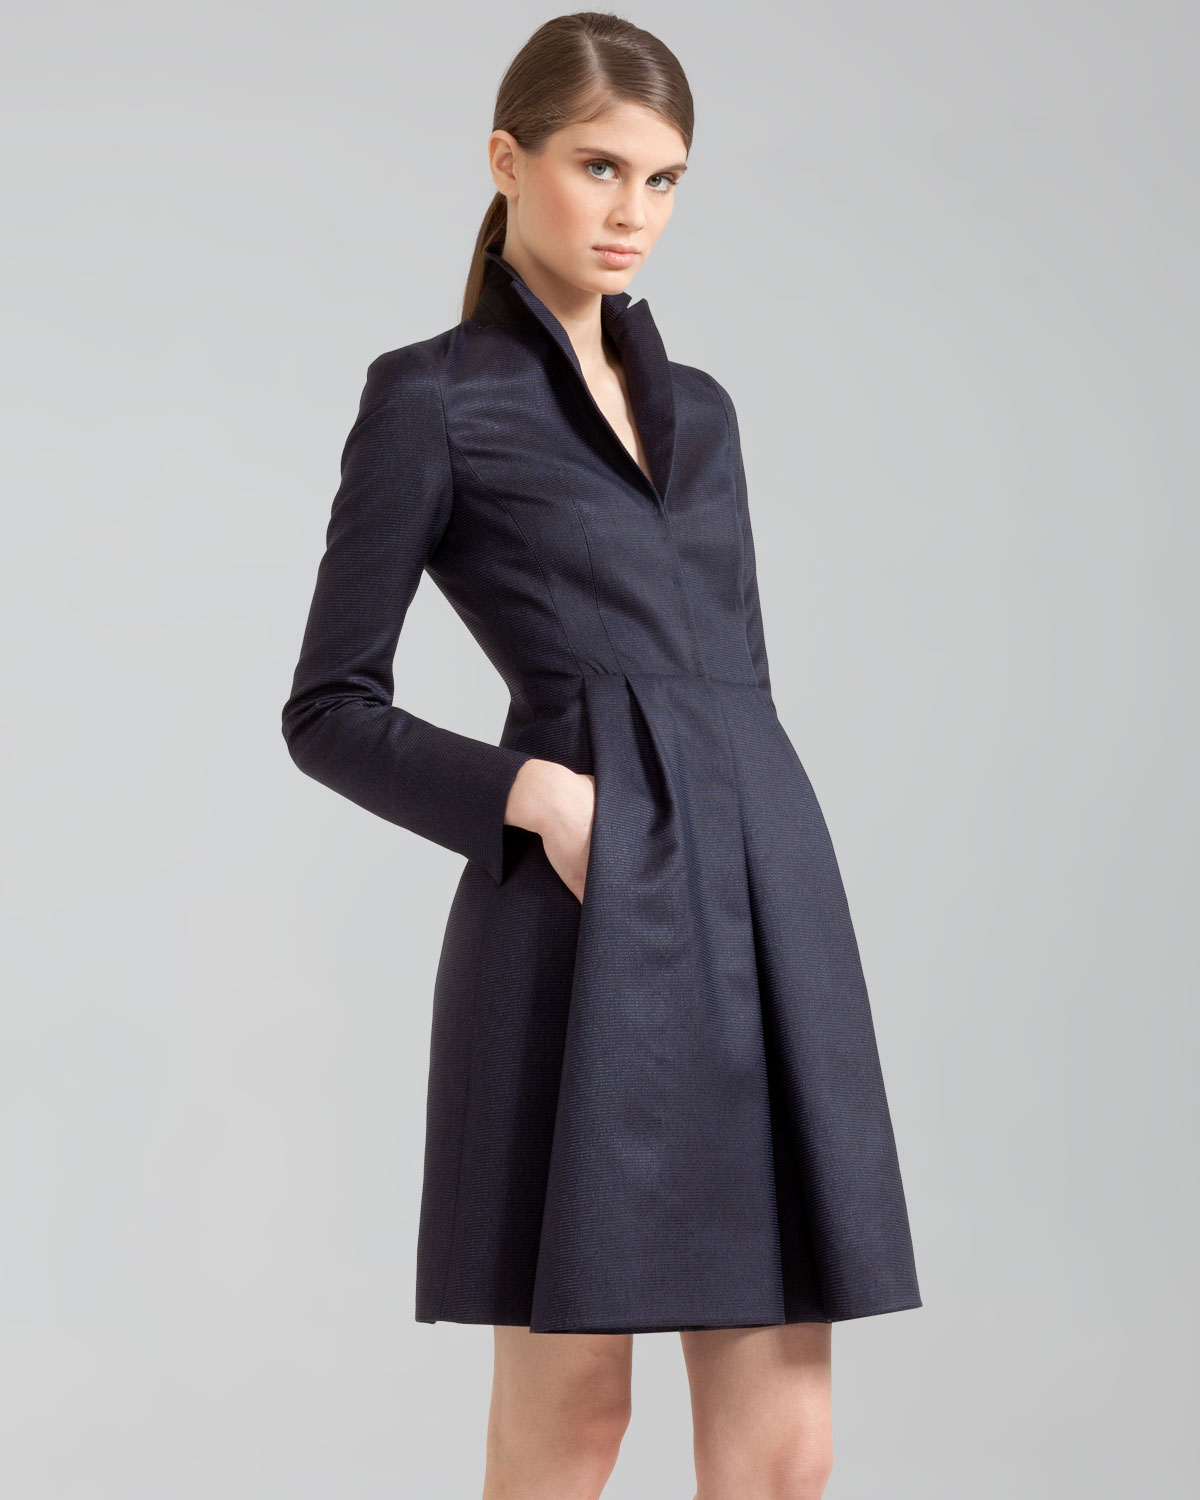 Dress Overcoat – Telegraph